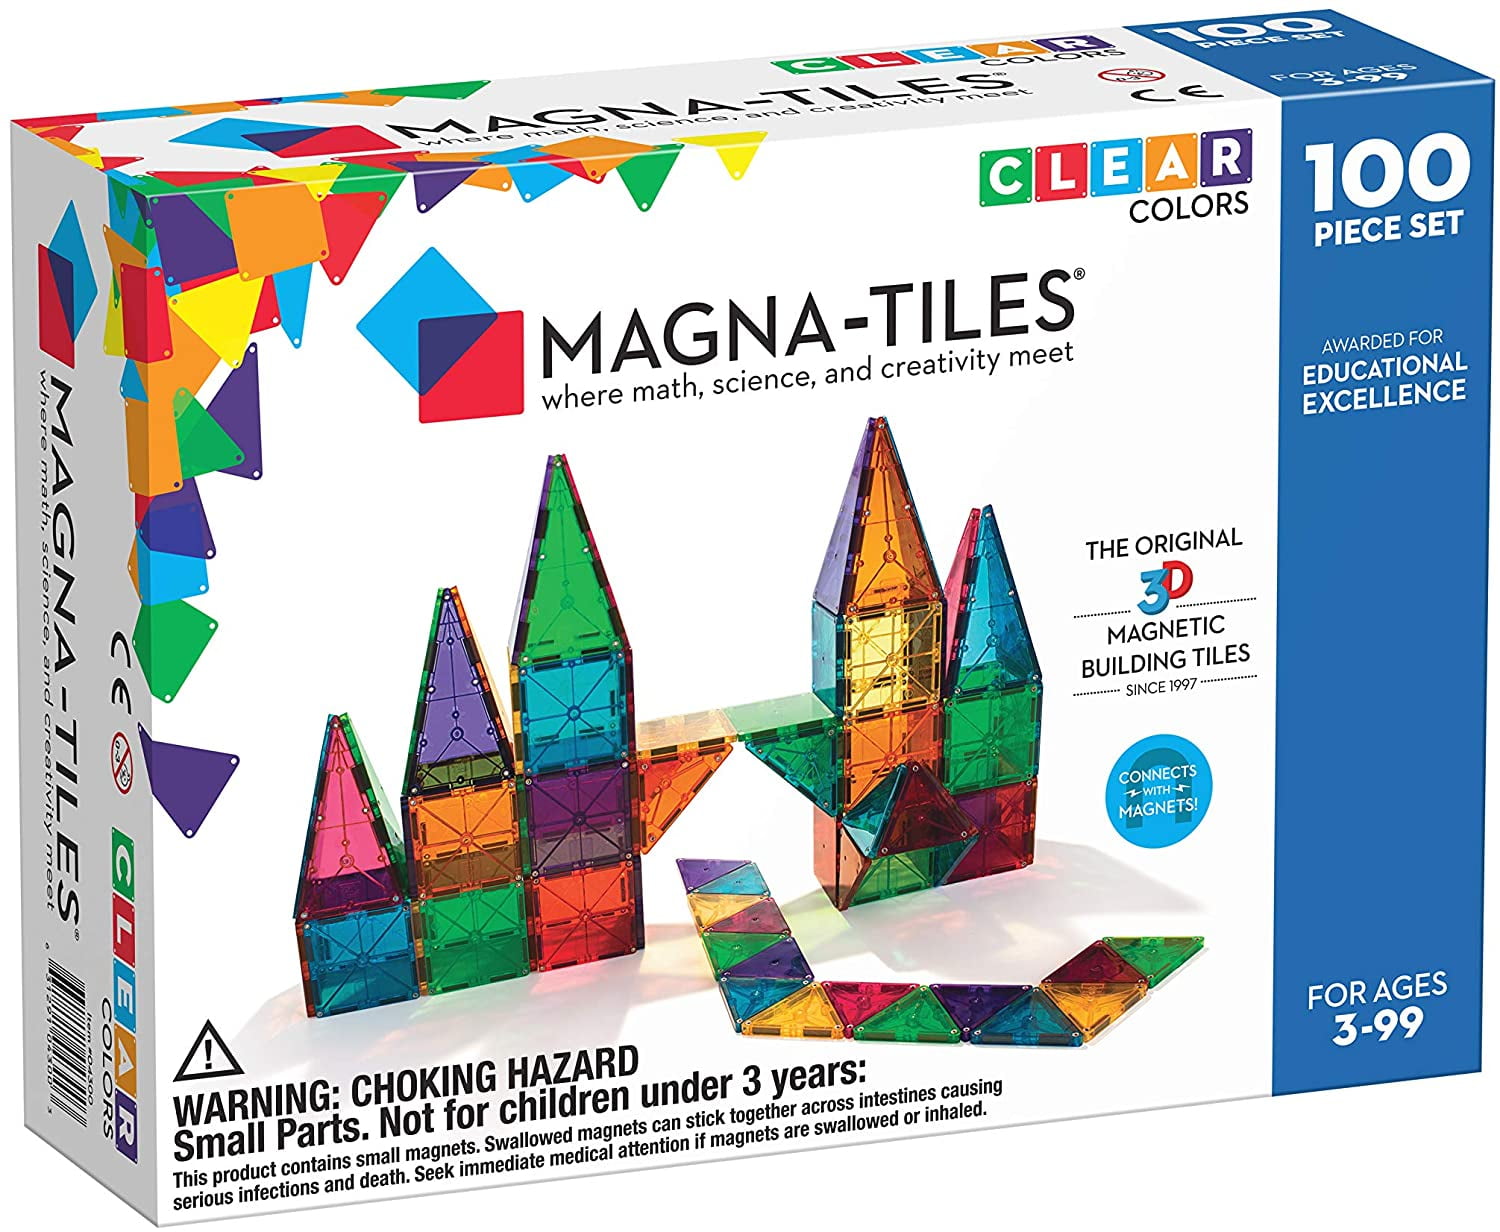 Magna-Tiles Clear Colors 100 Piece Set RAINBOW BOARD FUSING MATH CREATIVITY 